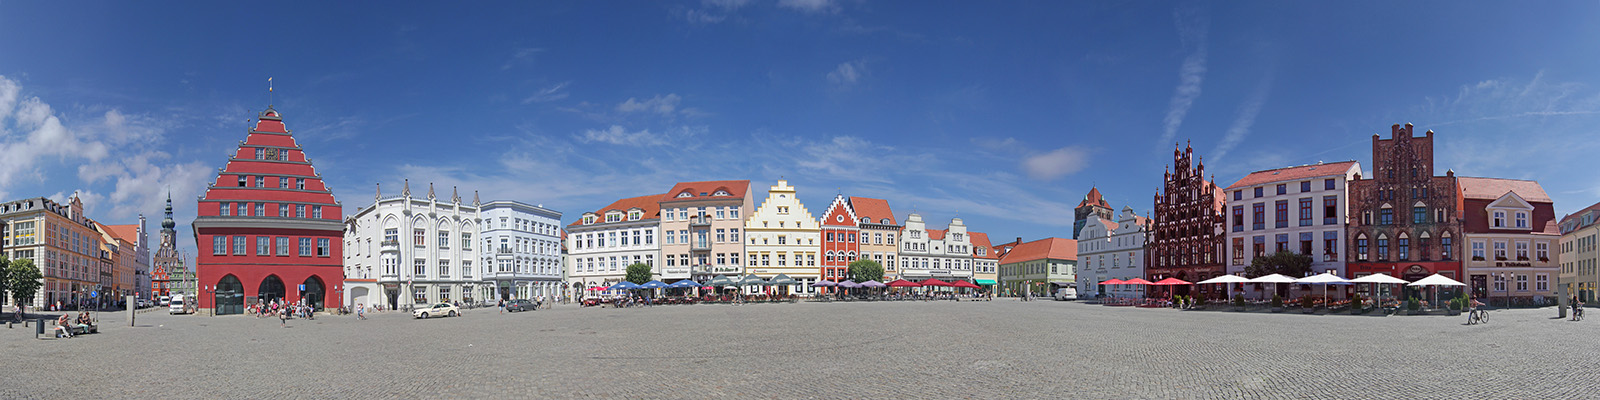 Panorama: Greifswald Markt - Motivnummer: hgw-alt-02